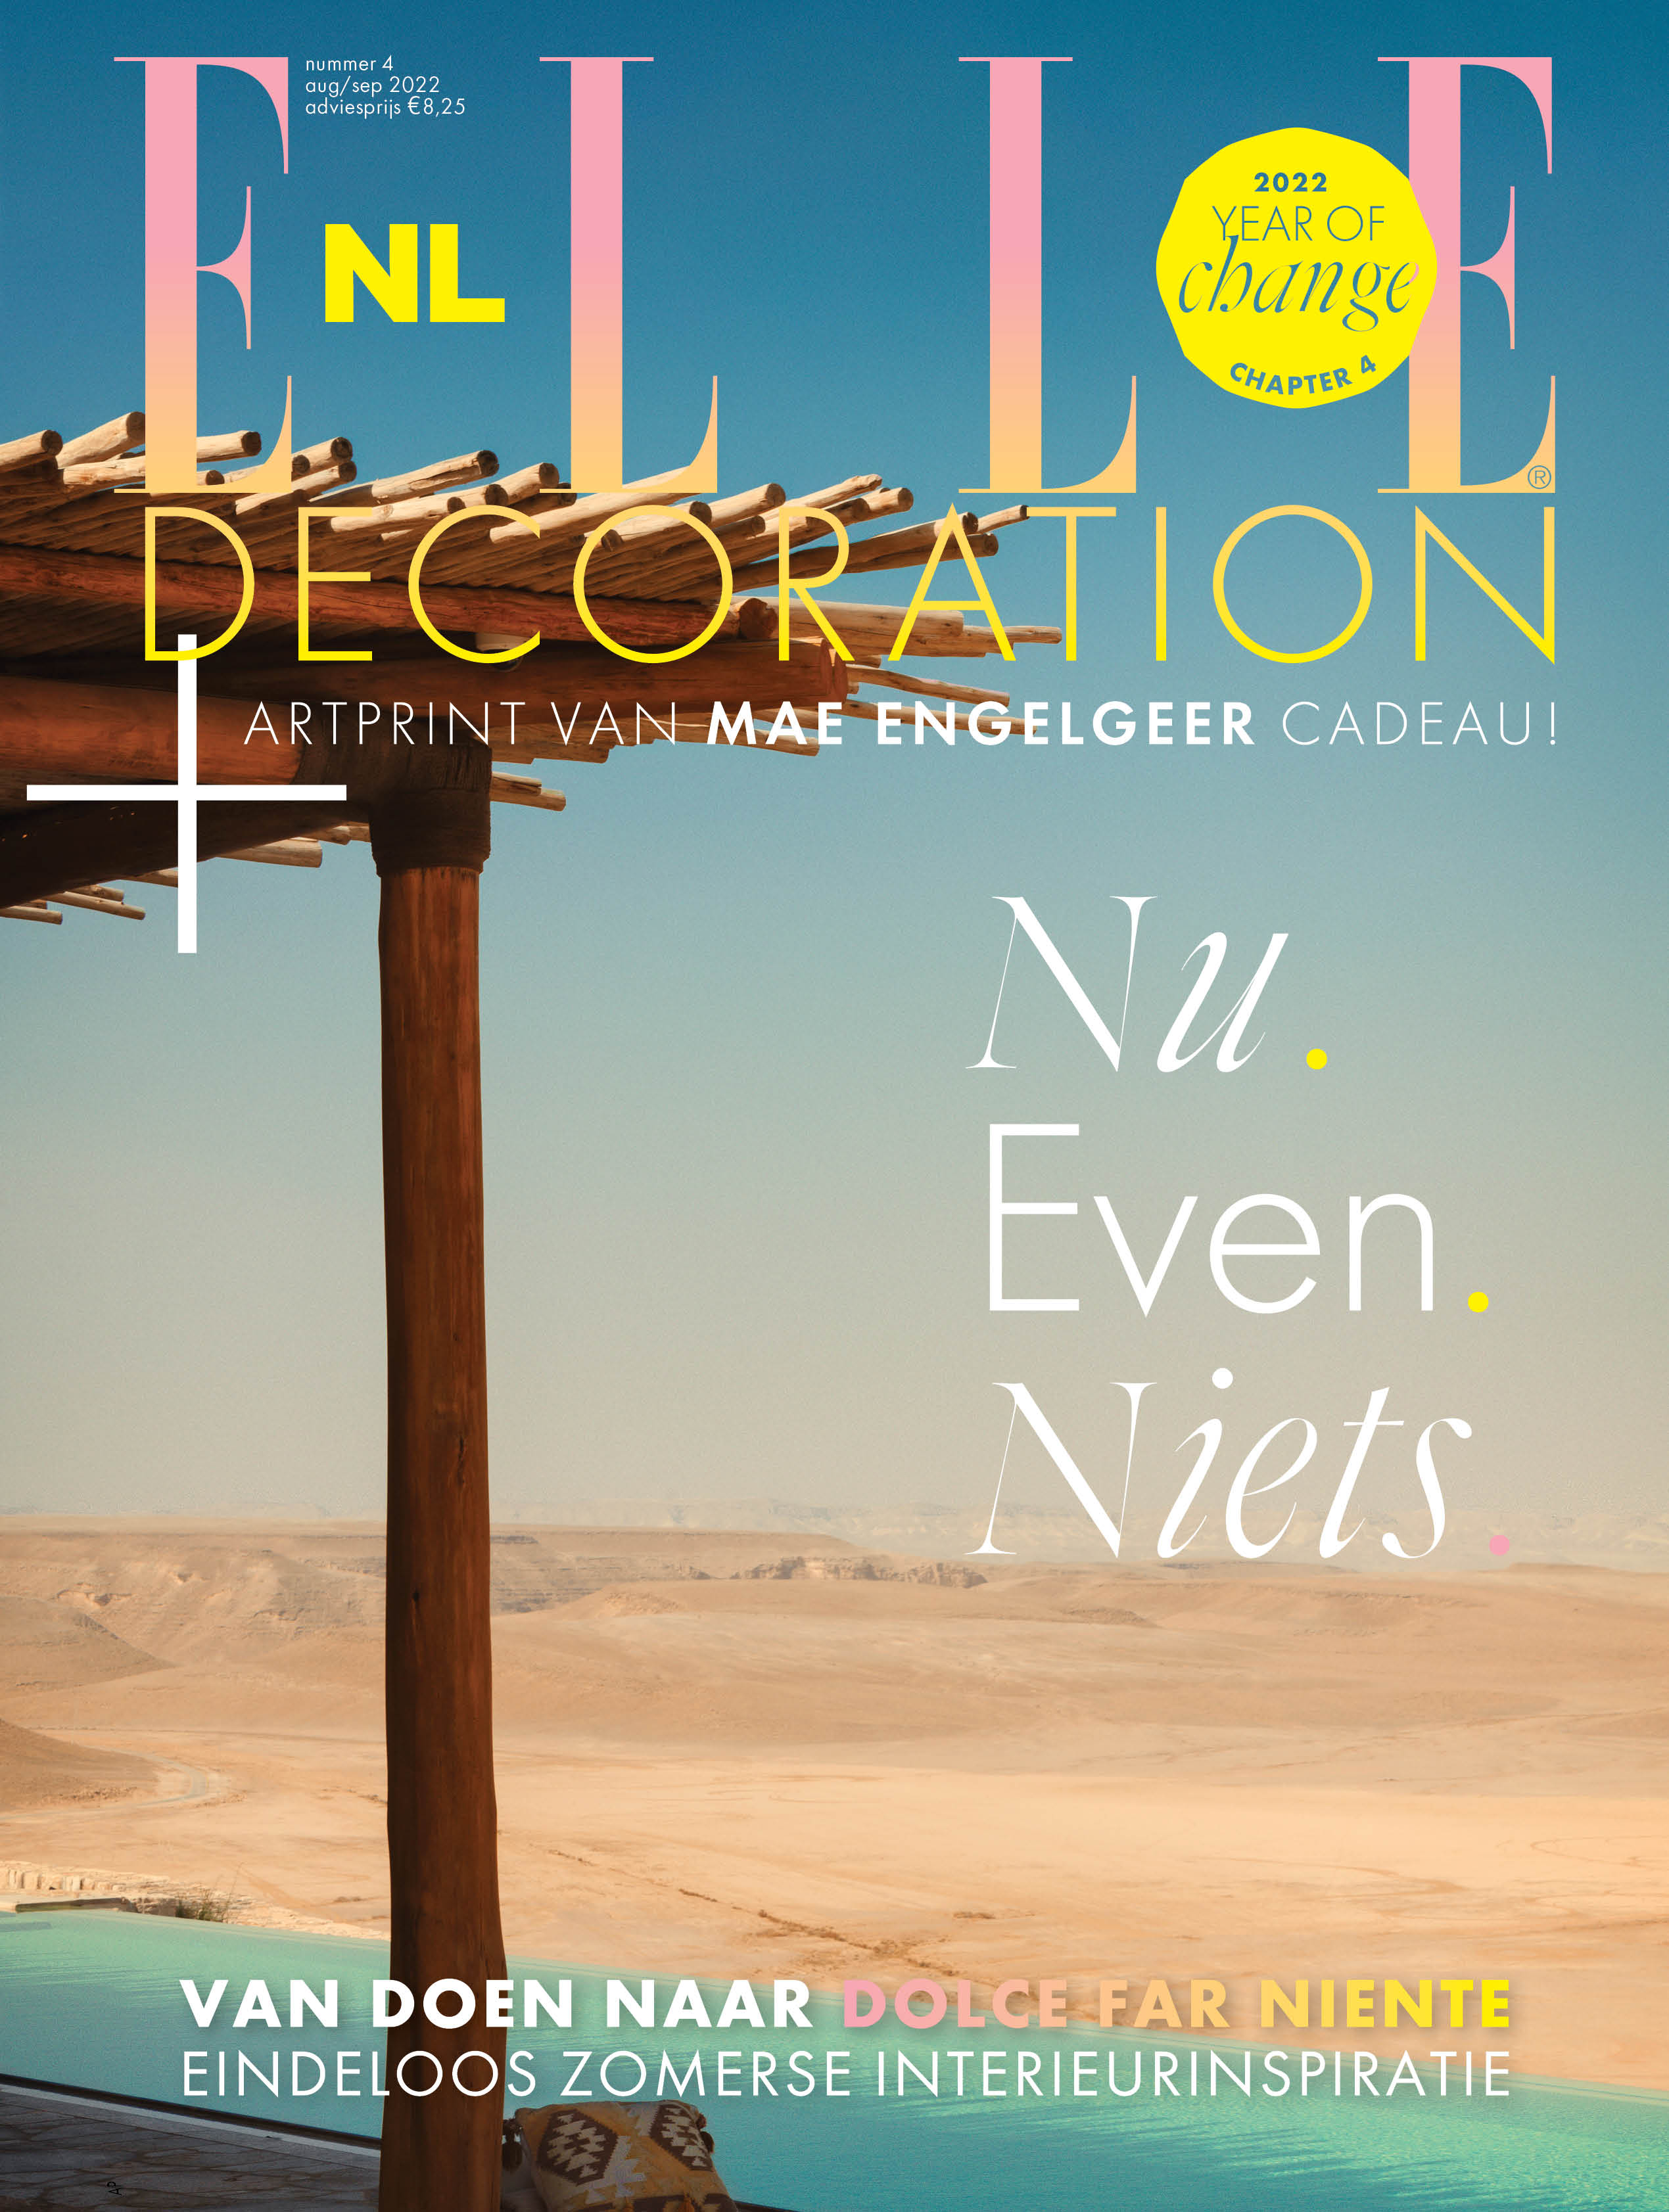 ELLE Decoration editie 4 2022 - tijdschrift - interieur - design - woontrends - Keukenspecial cadeau